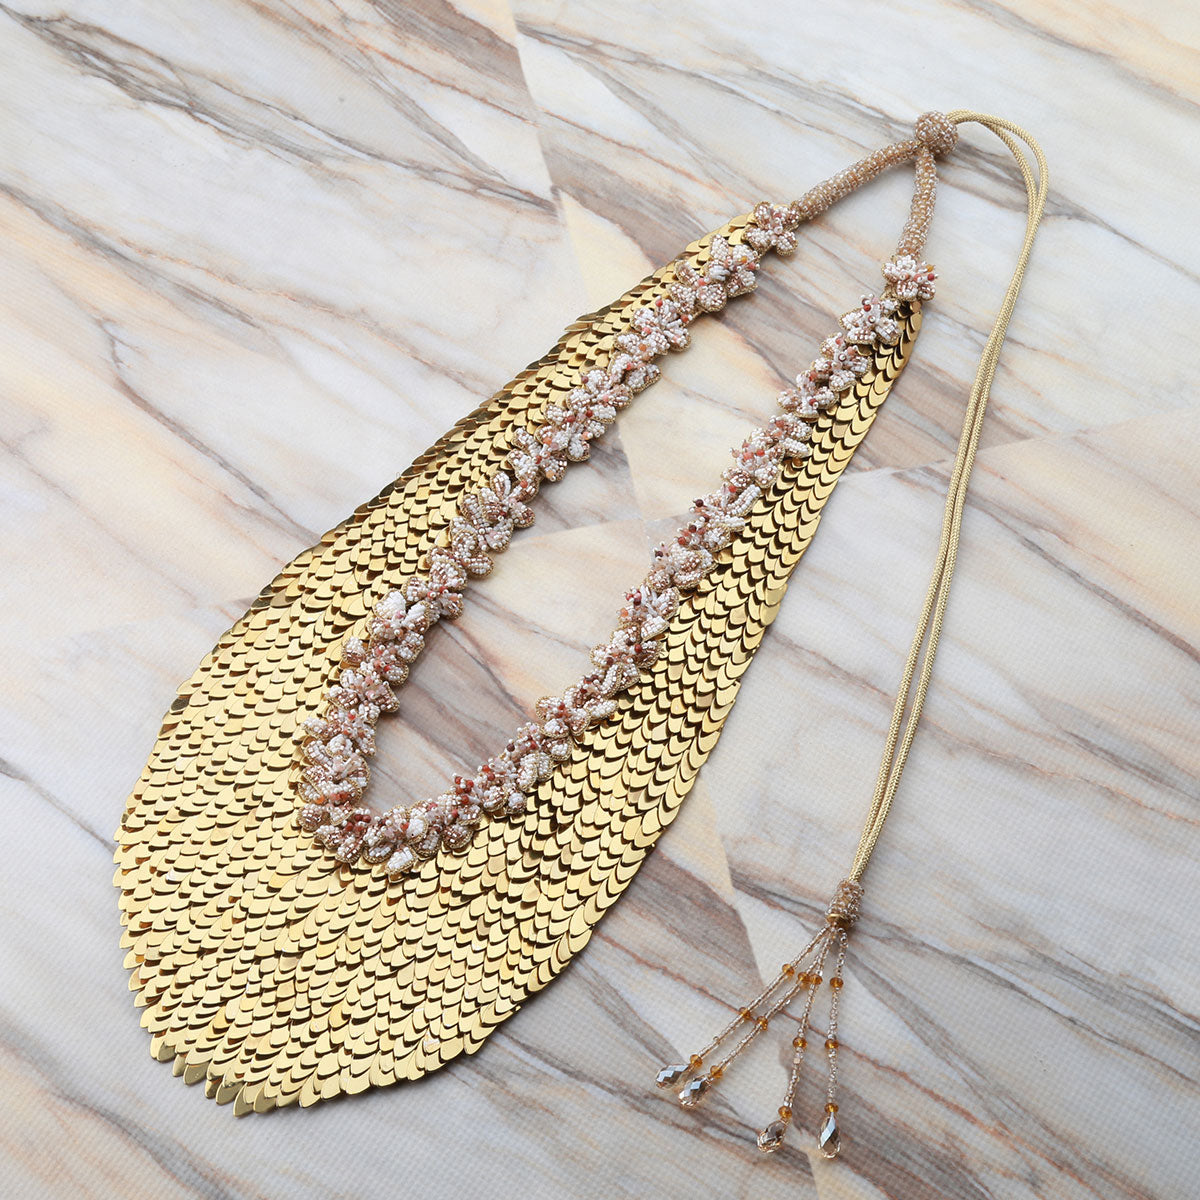 Unique Handmade Statement Necklaces | Tatty Devine Jewellery